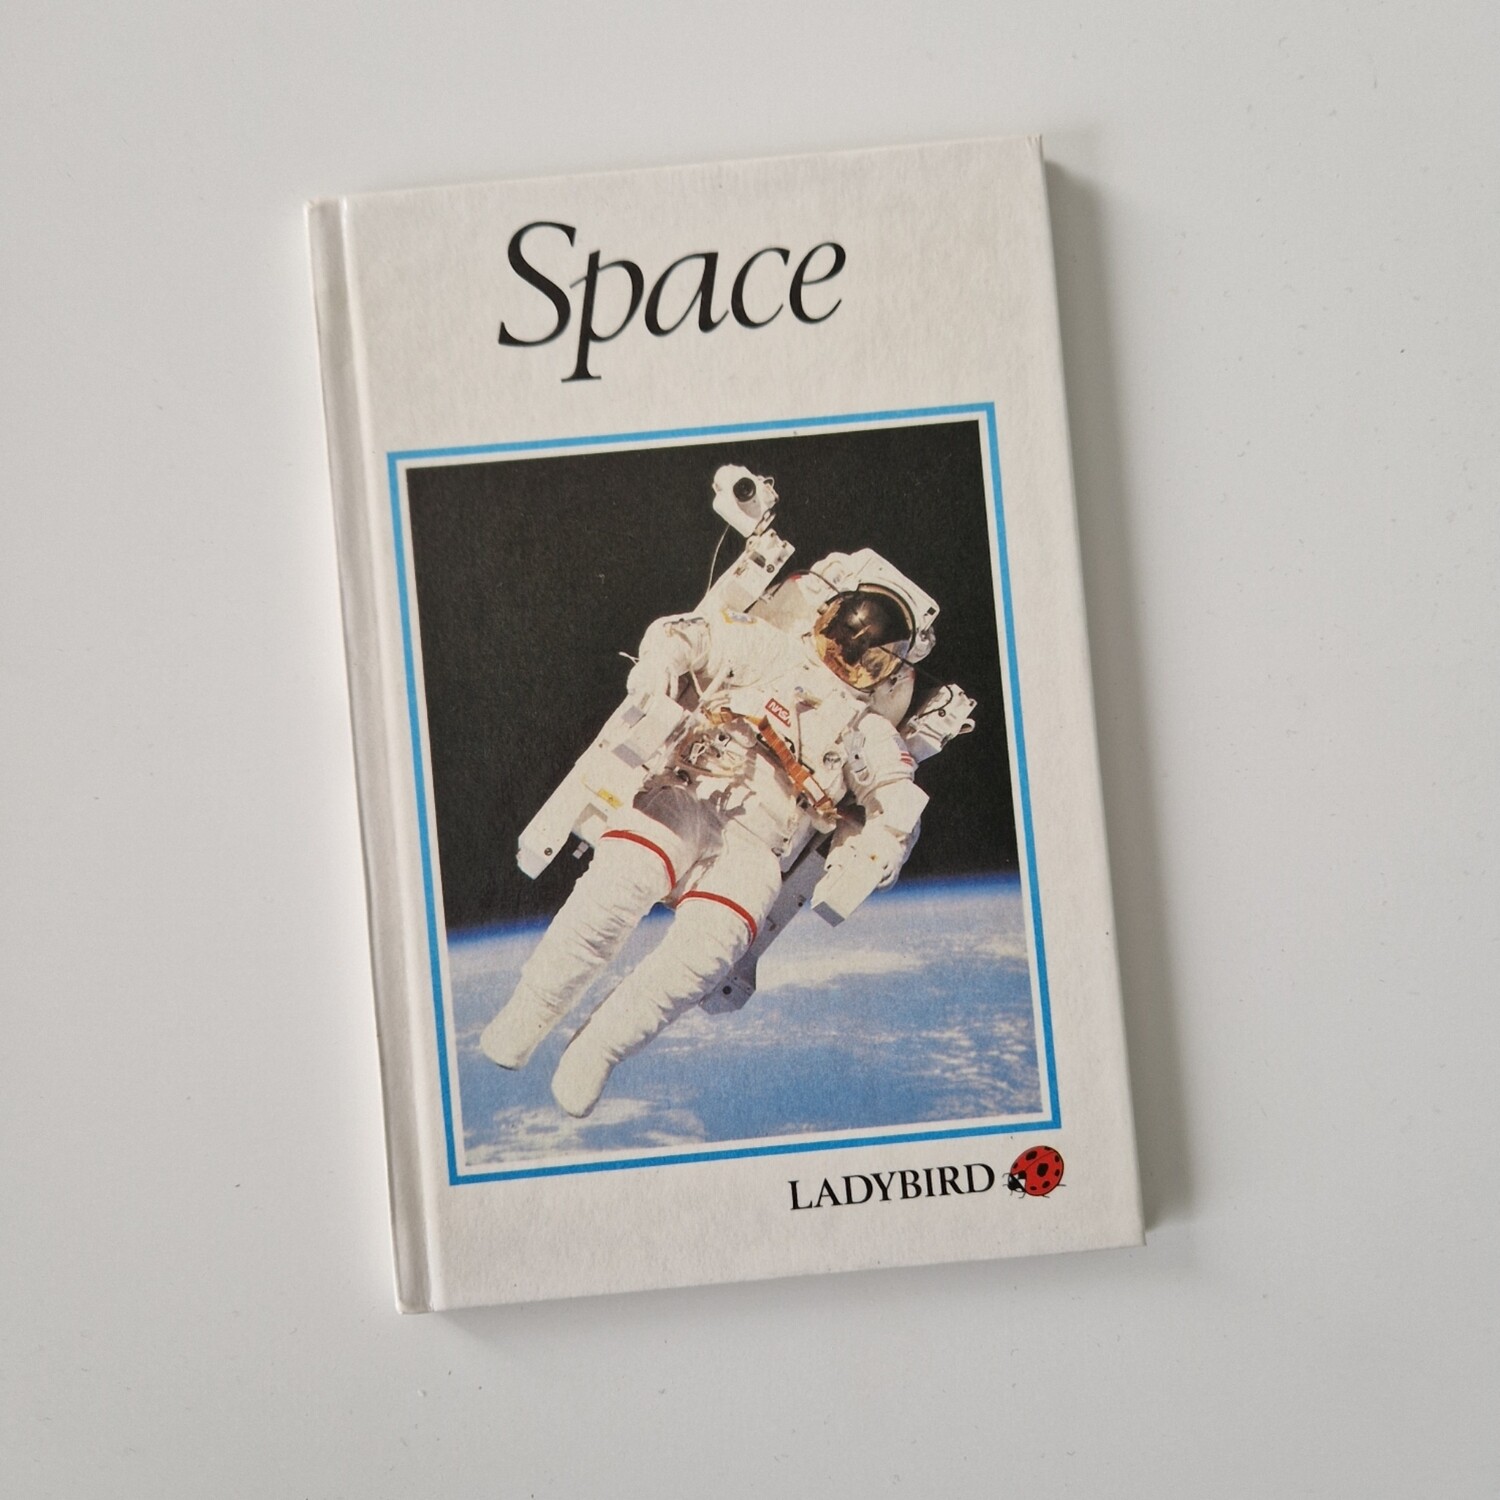 Space - Ladybird Science Book 1984 - spaceman